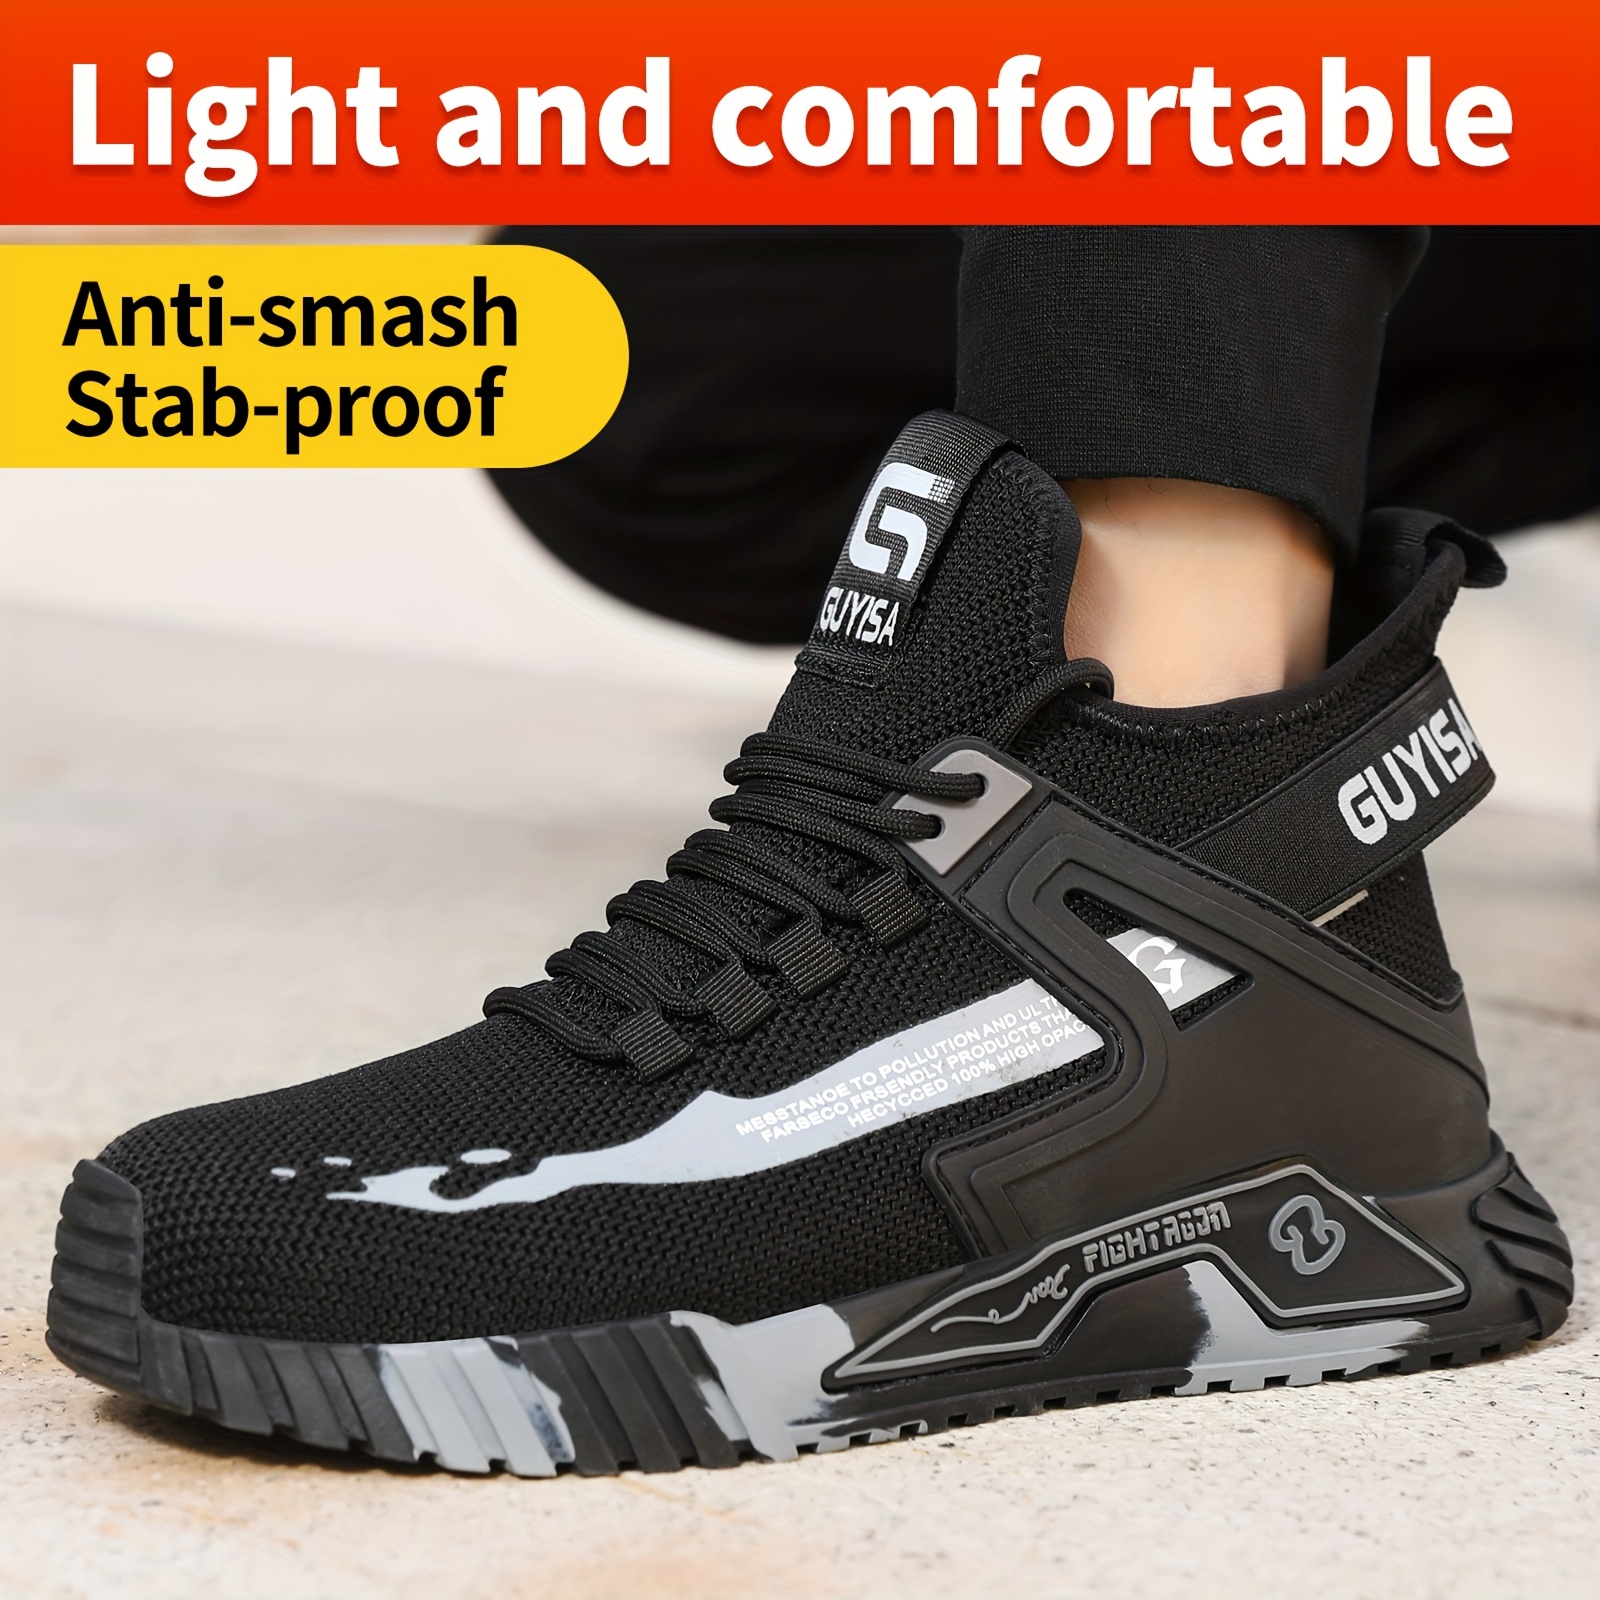 Men's Comfortable Work Safety Shoes - Puncture-Resistant, Non-Slip ...